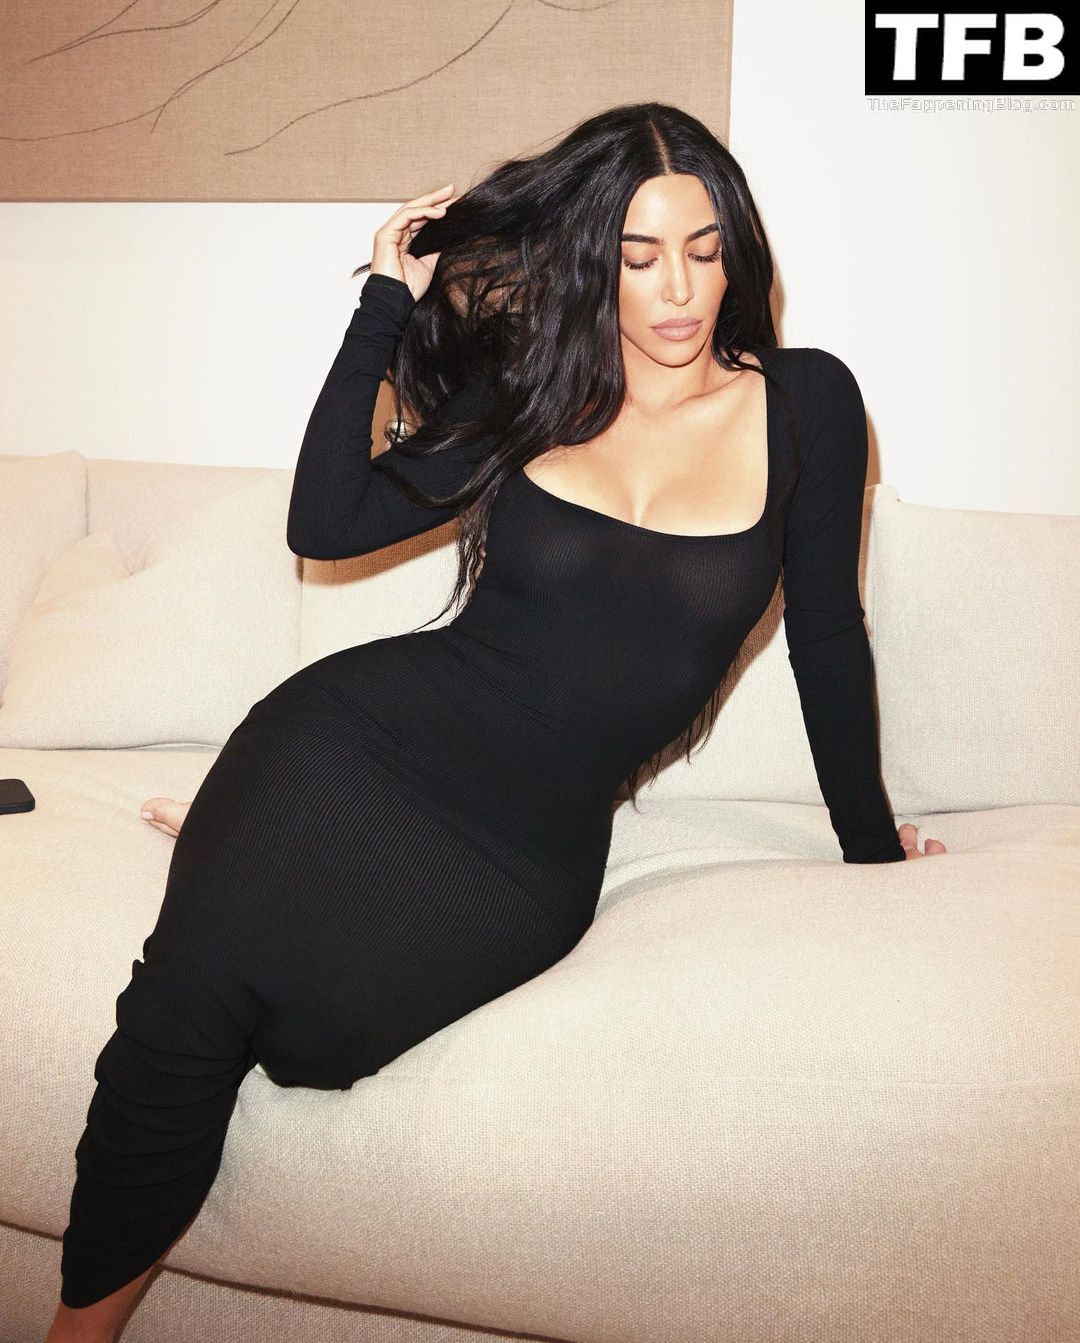 Kim-Kardashian-Tits-The-Fappening-Blog-1.jpg